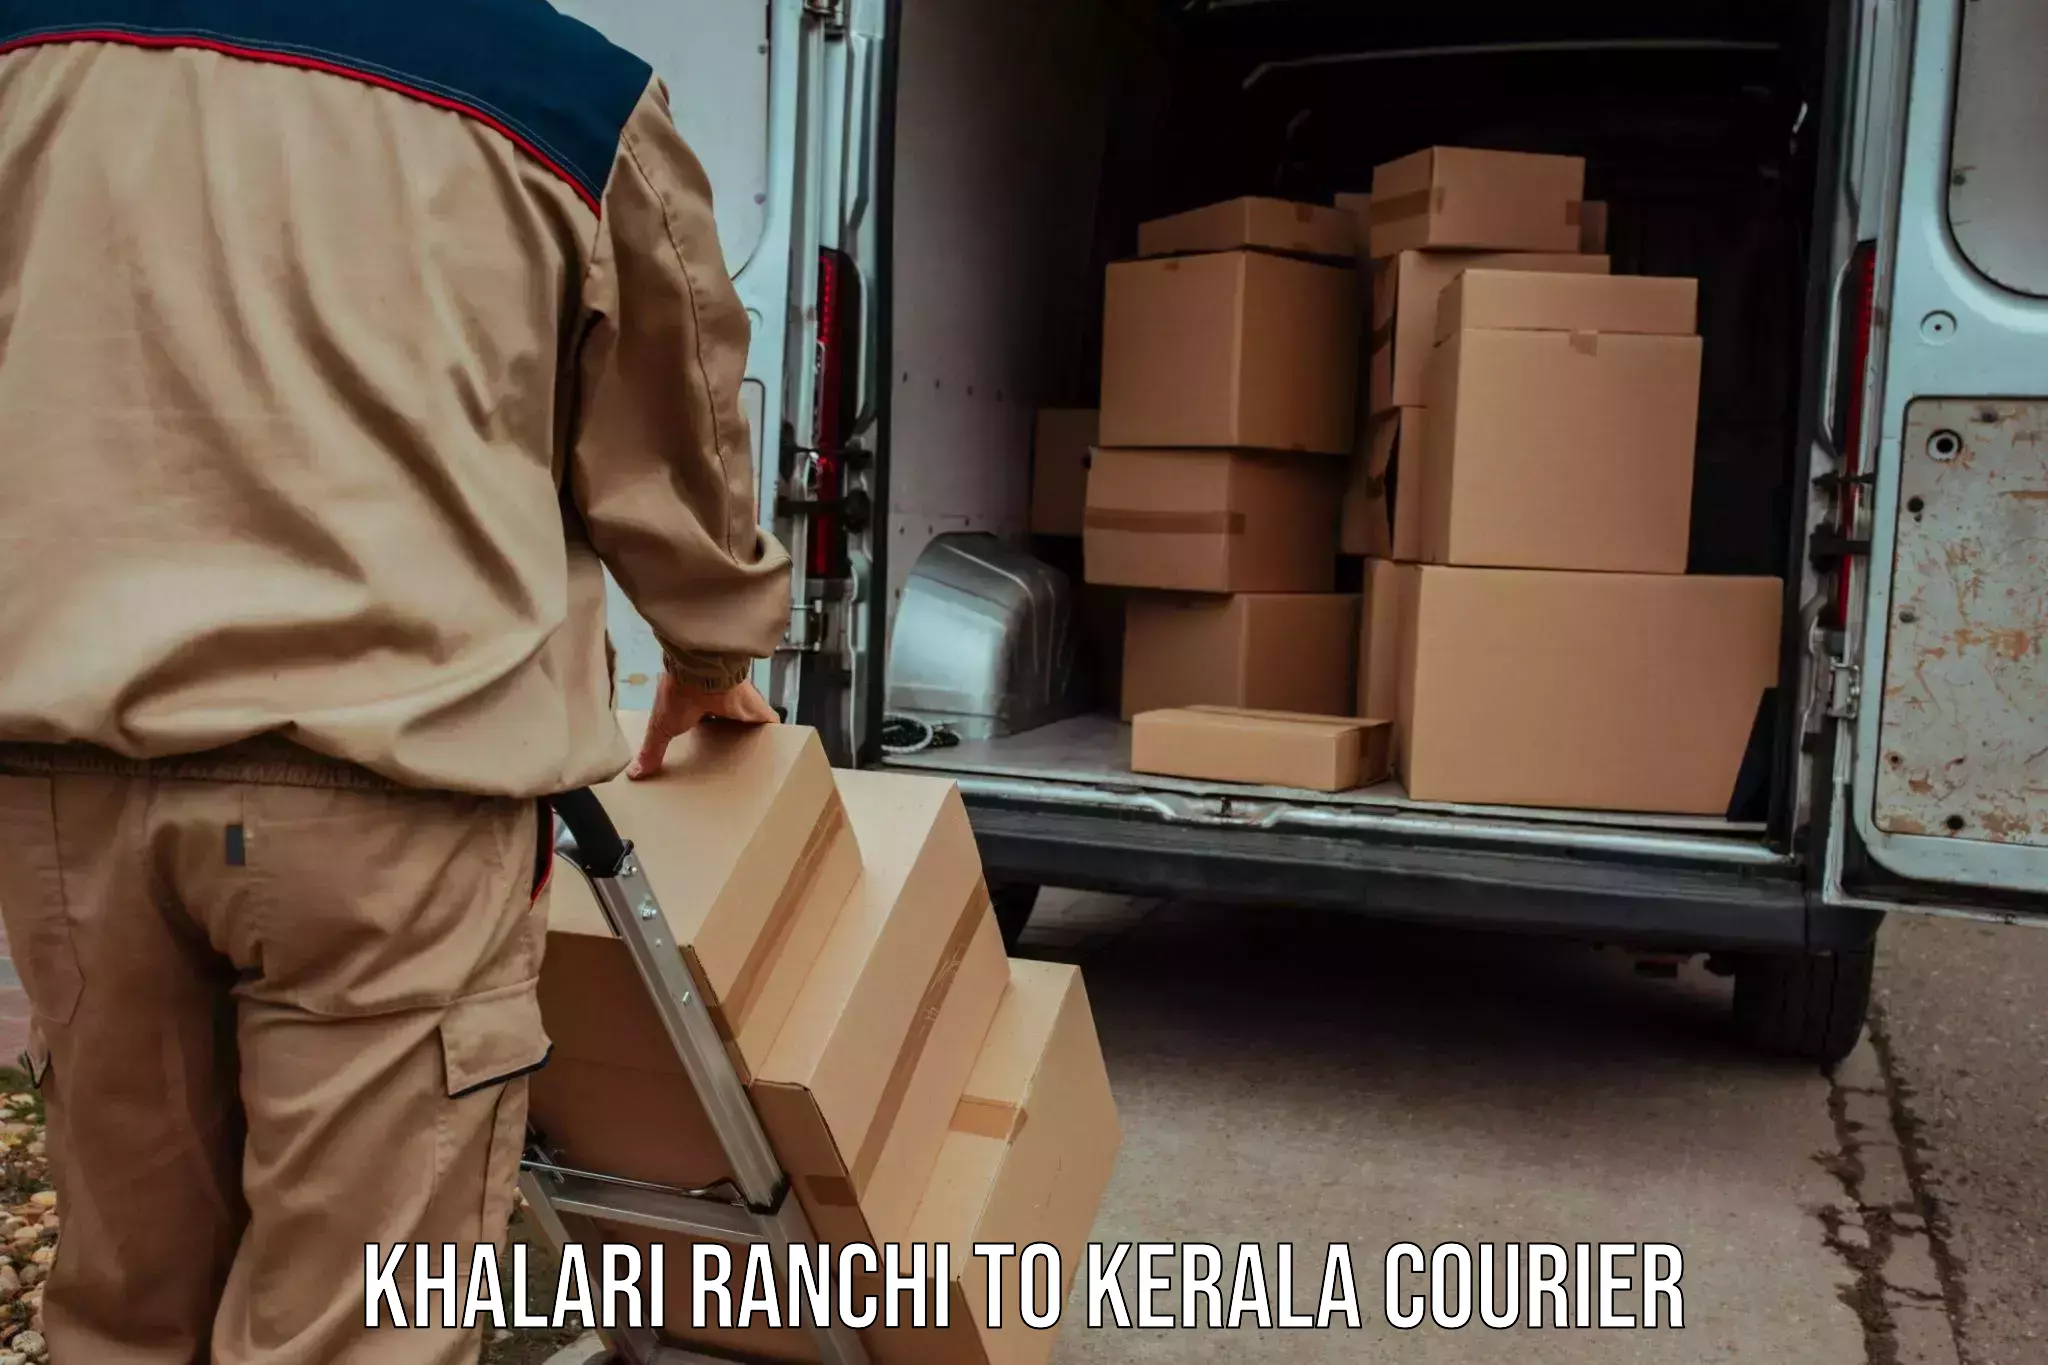 Quick dispatch service Khalari Ranchi to Cochin Port Kochi